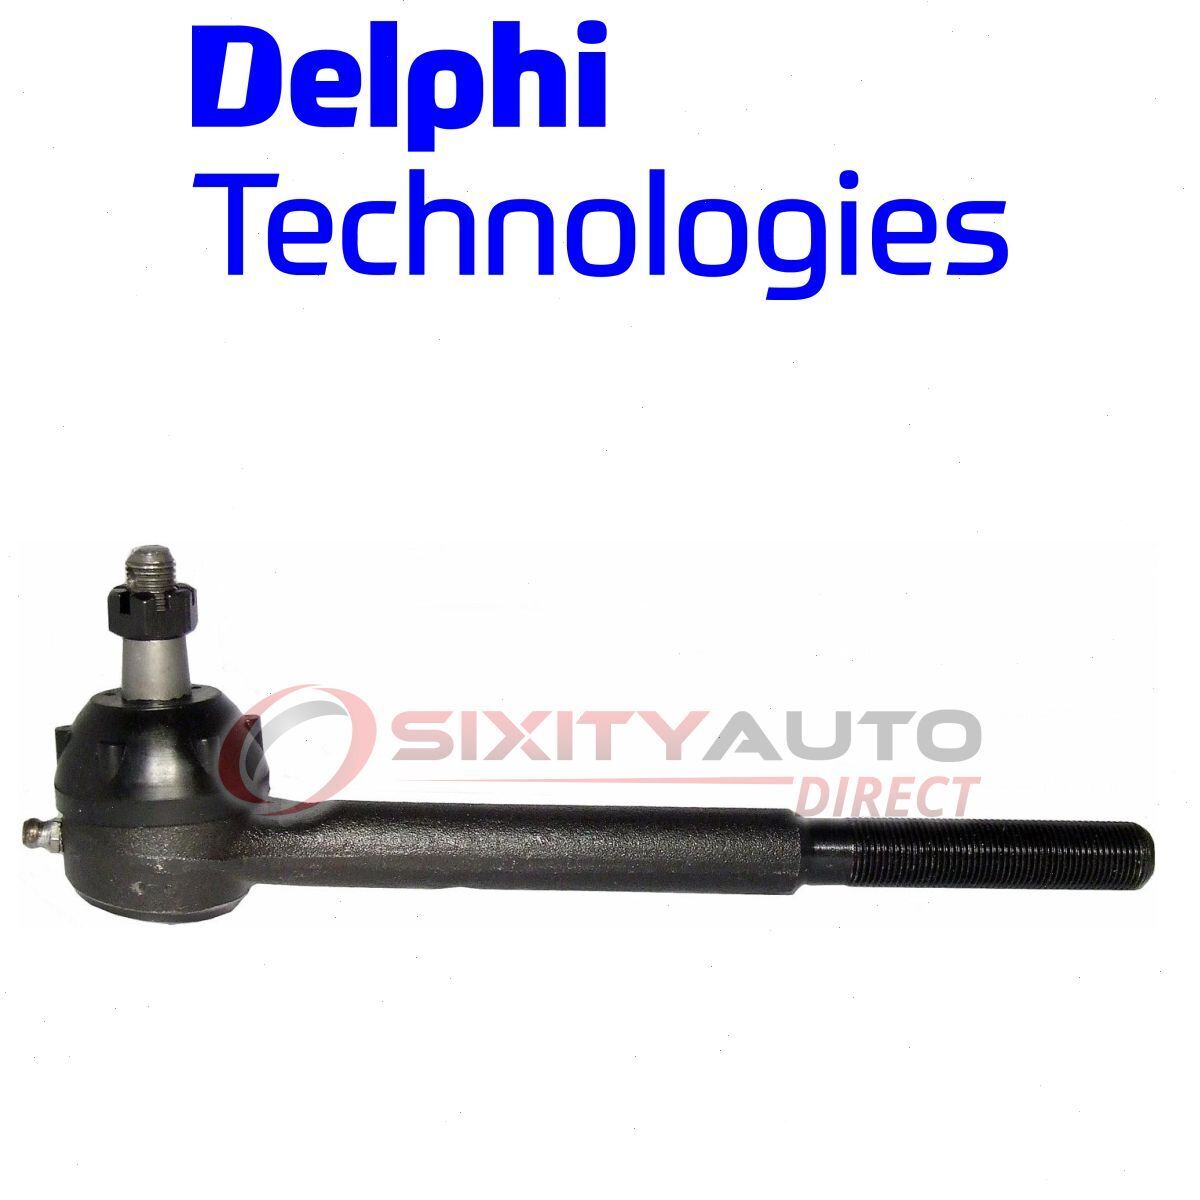 Delphi Inner Steering Tie Rod End for 1978-1984 Oldsmobile Cutlass Calais pm